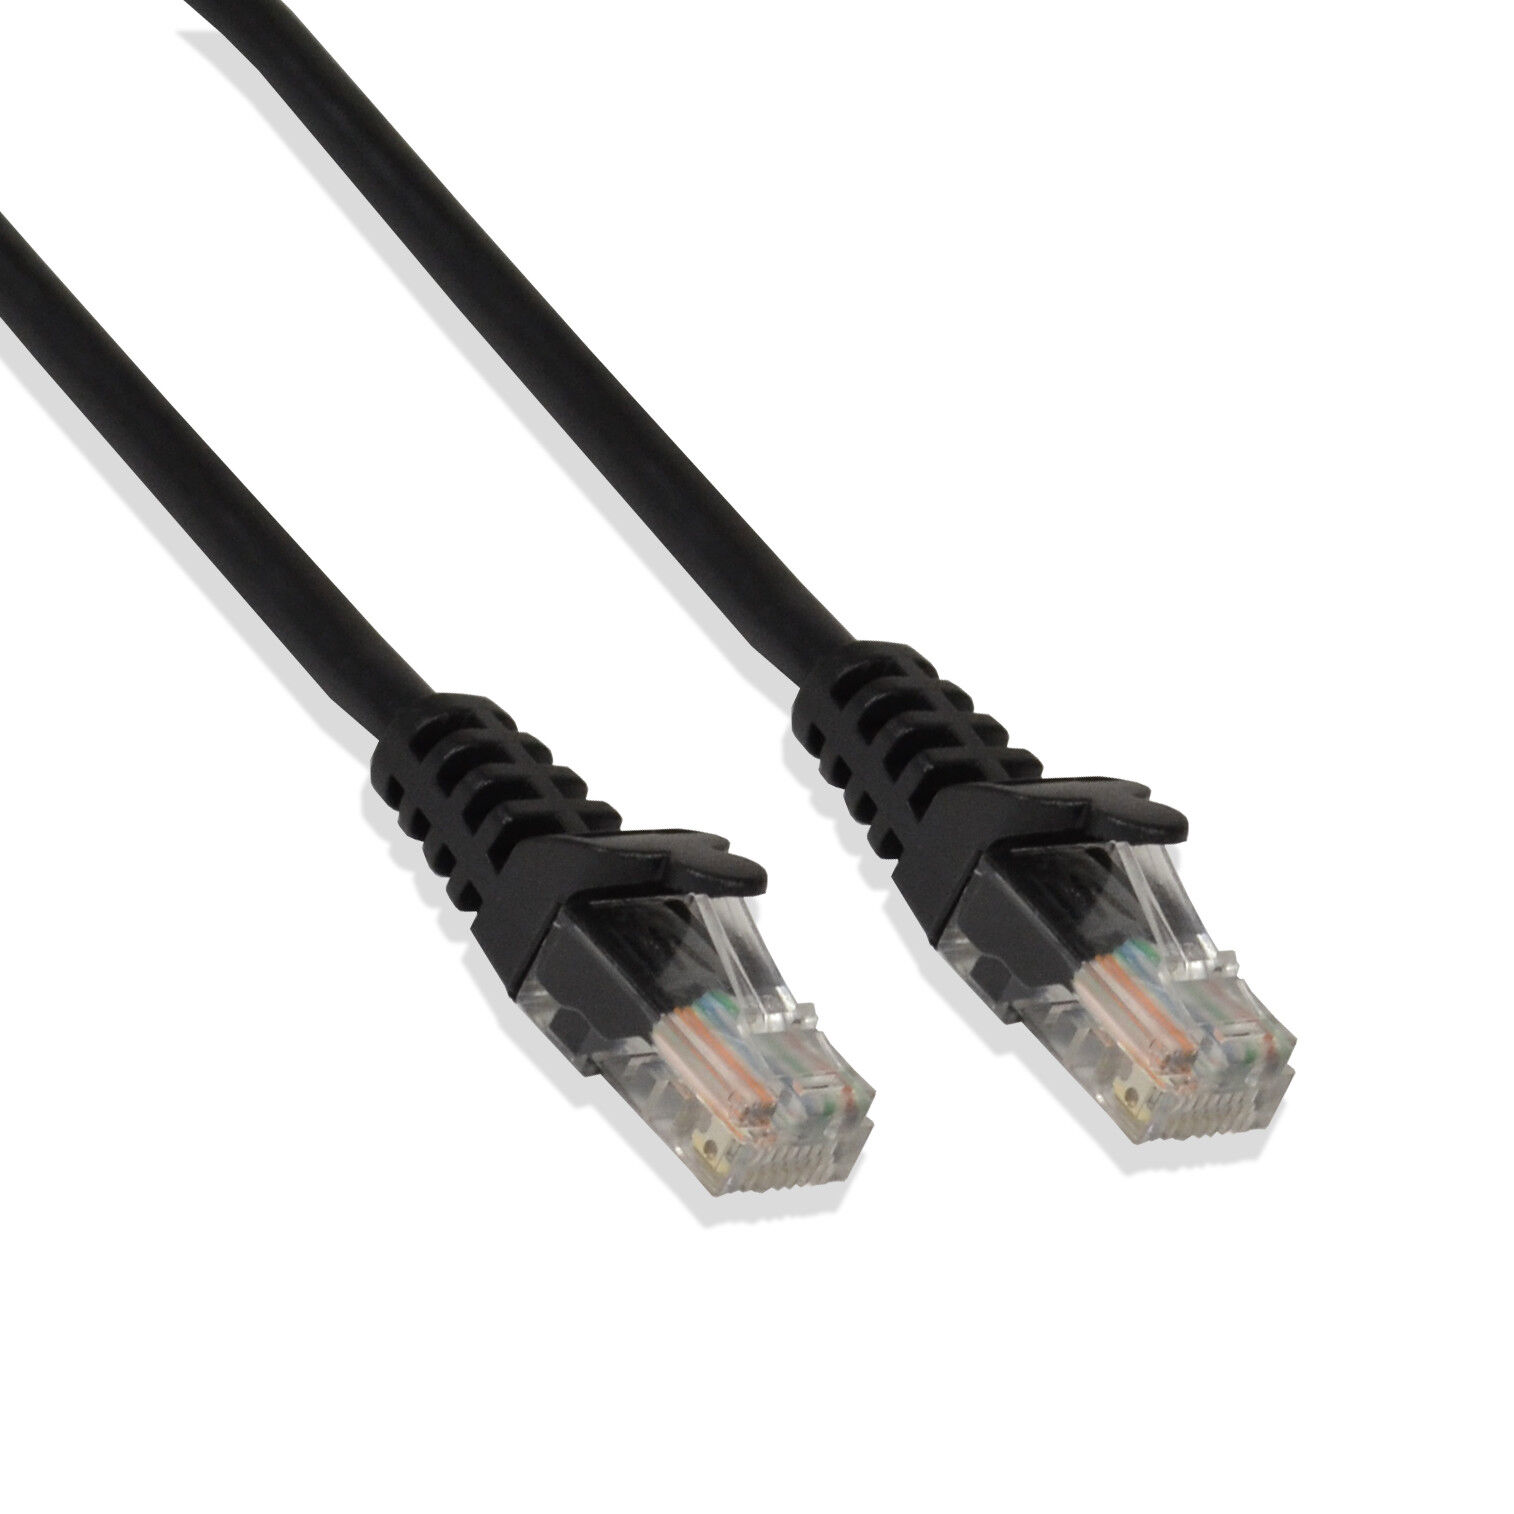 2ft Cat6 Cable Ethernet Lan Network RJ45 Patch Cord Internet Black (50 Pack)